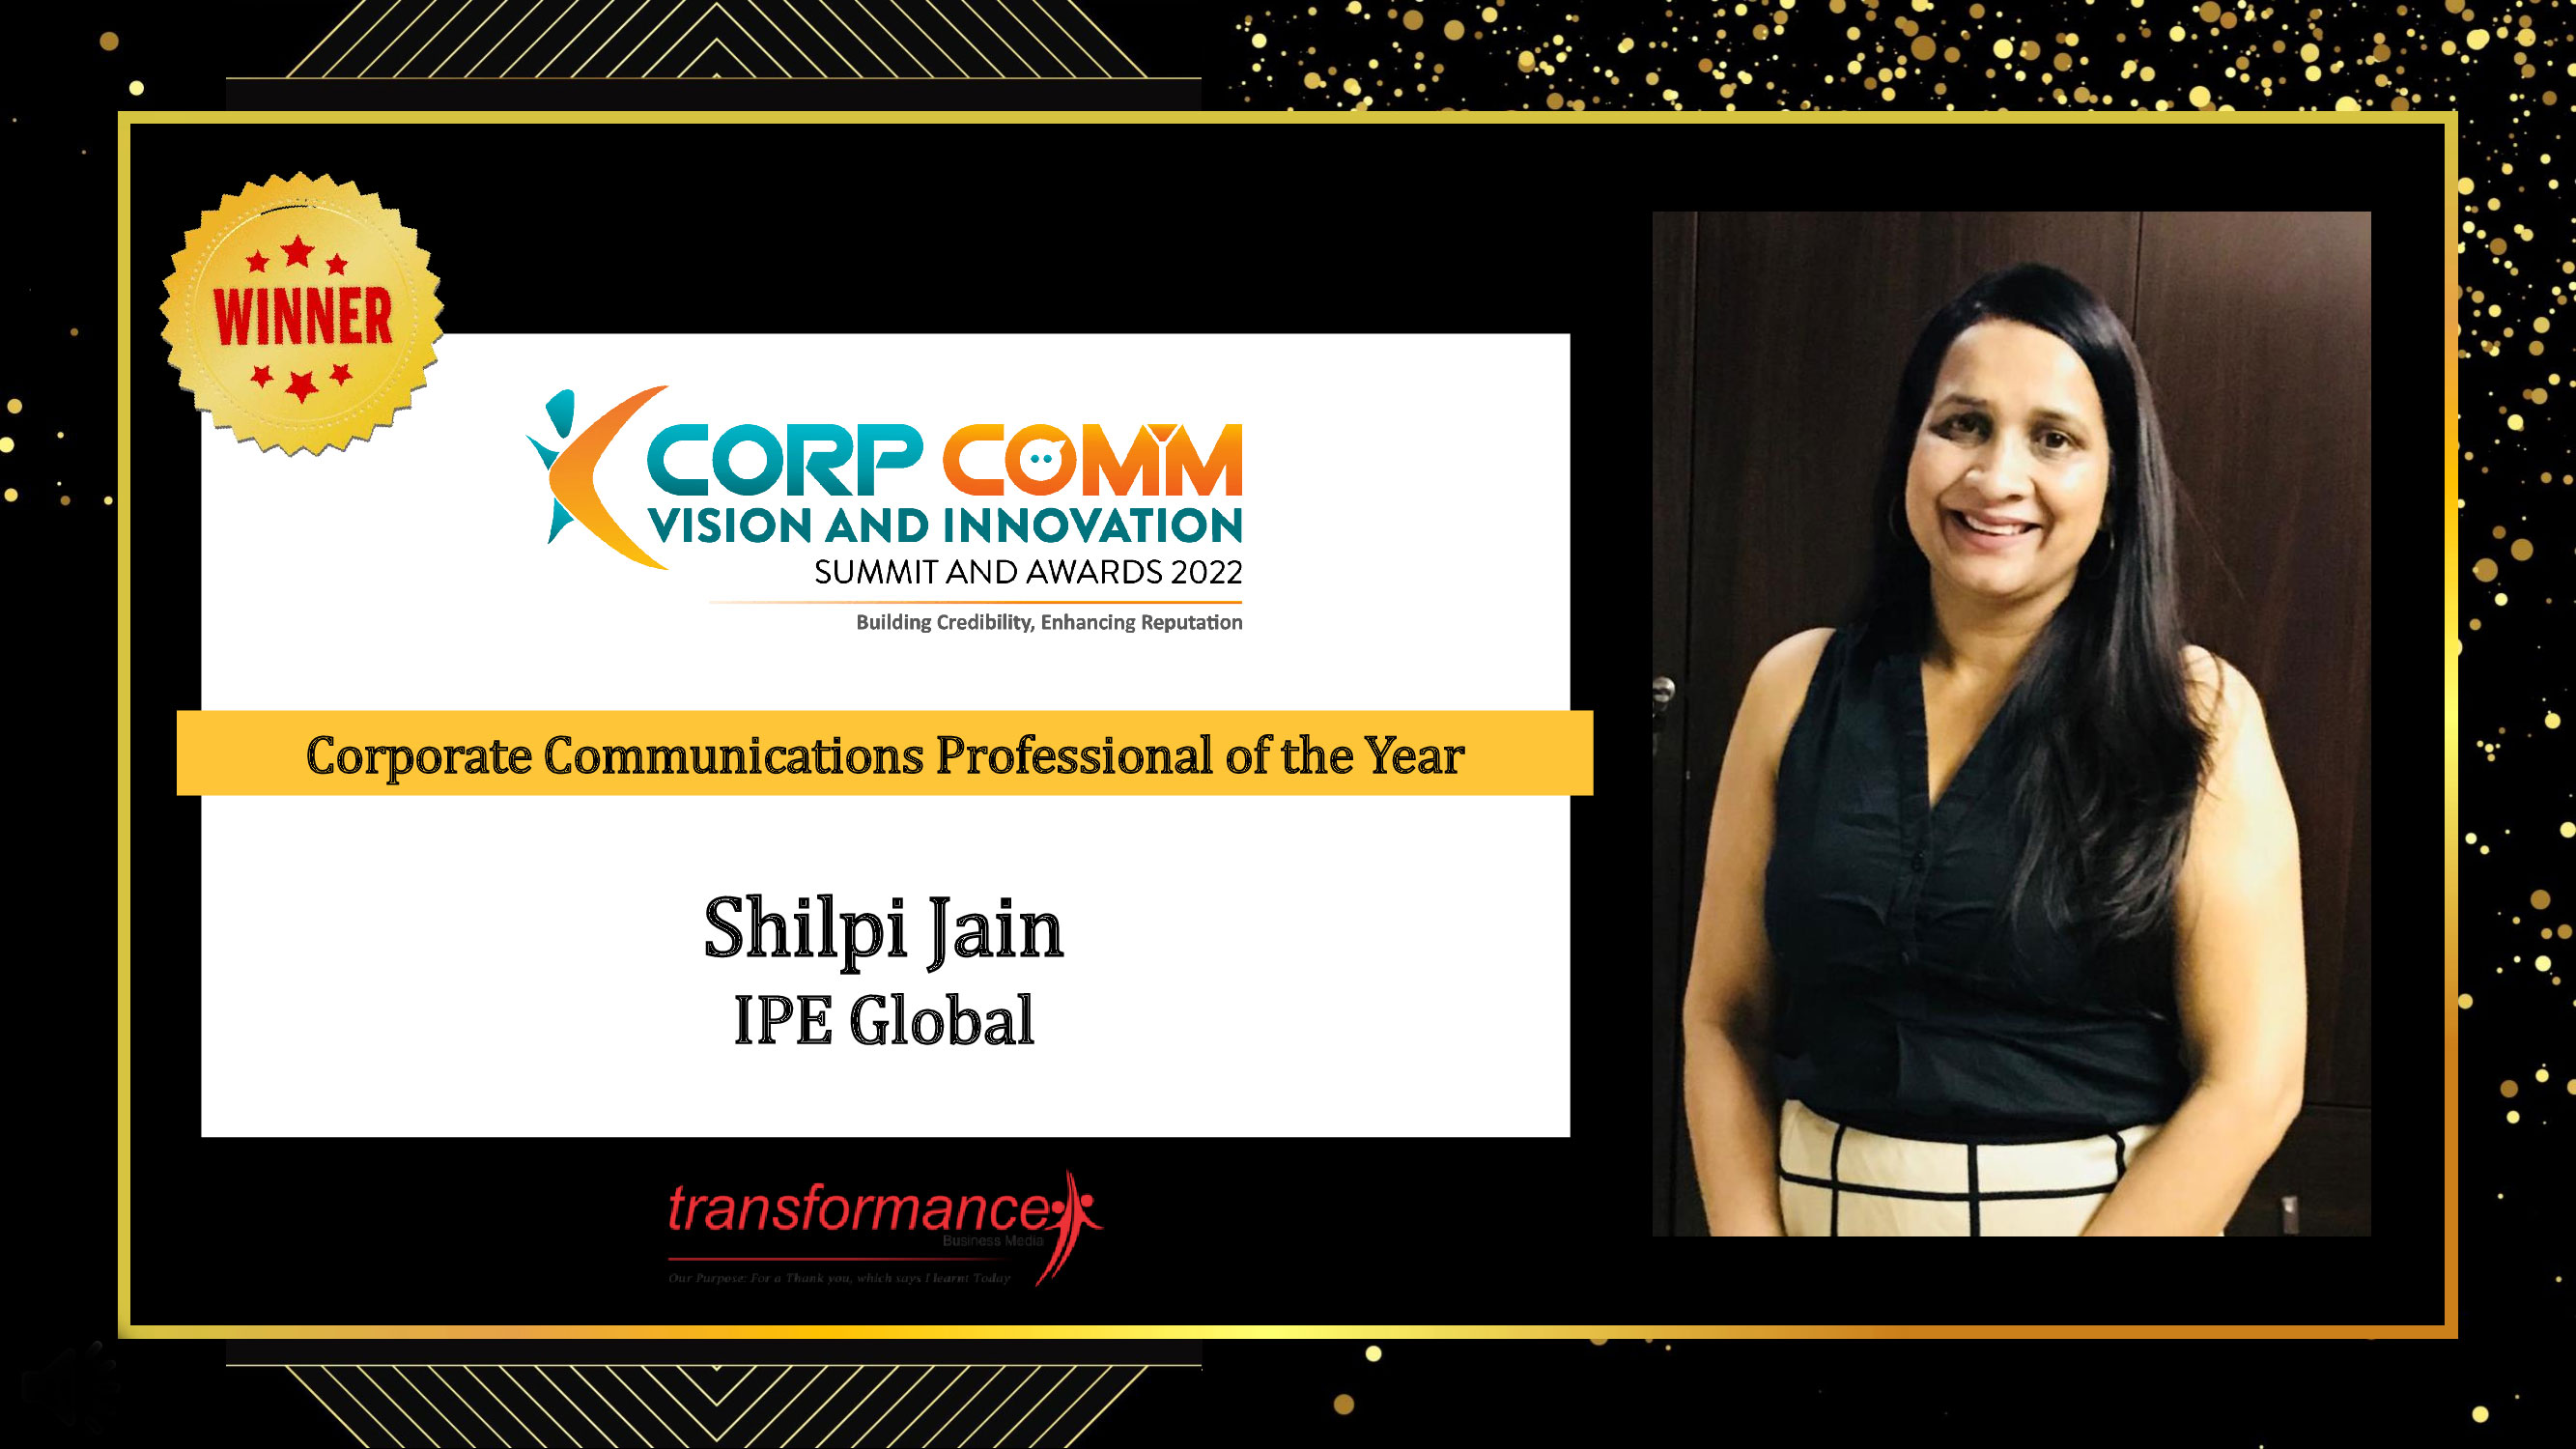 Shilpi Jain, IPE Global